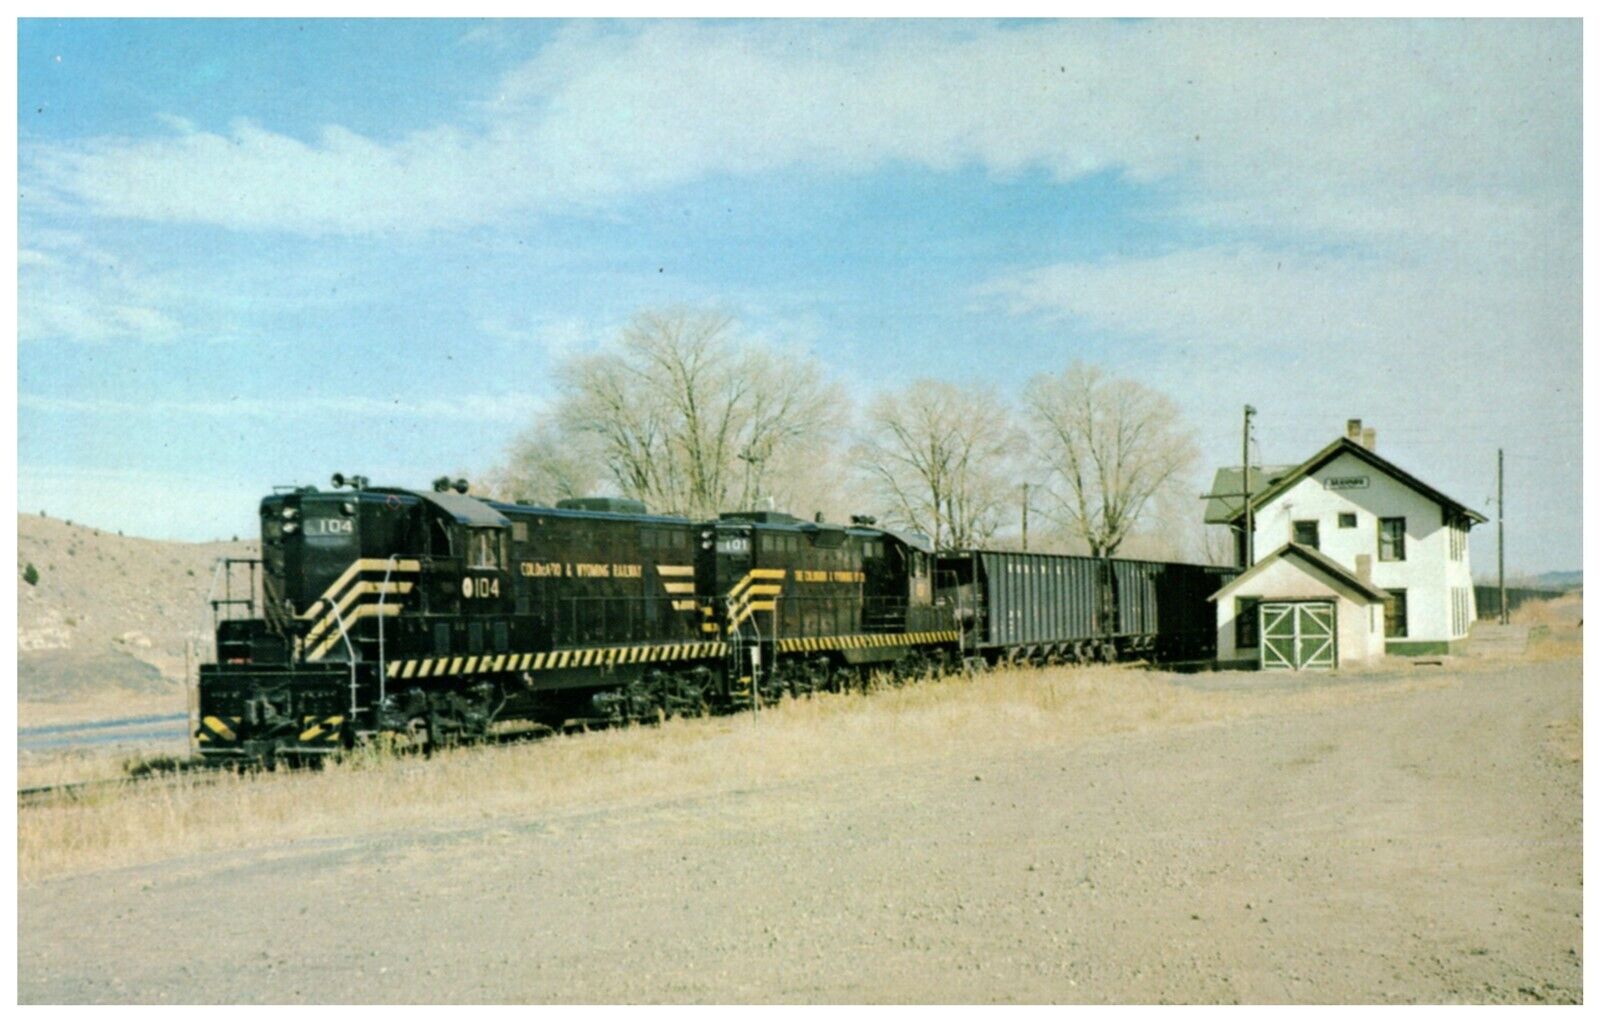 Colorado & Wyoming Coal Train #104 & 101 Segundo Colorado  1973